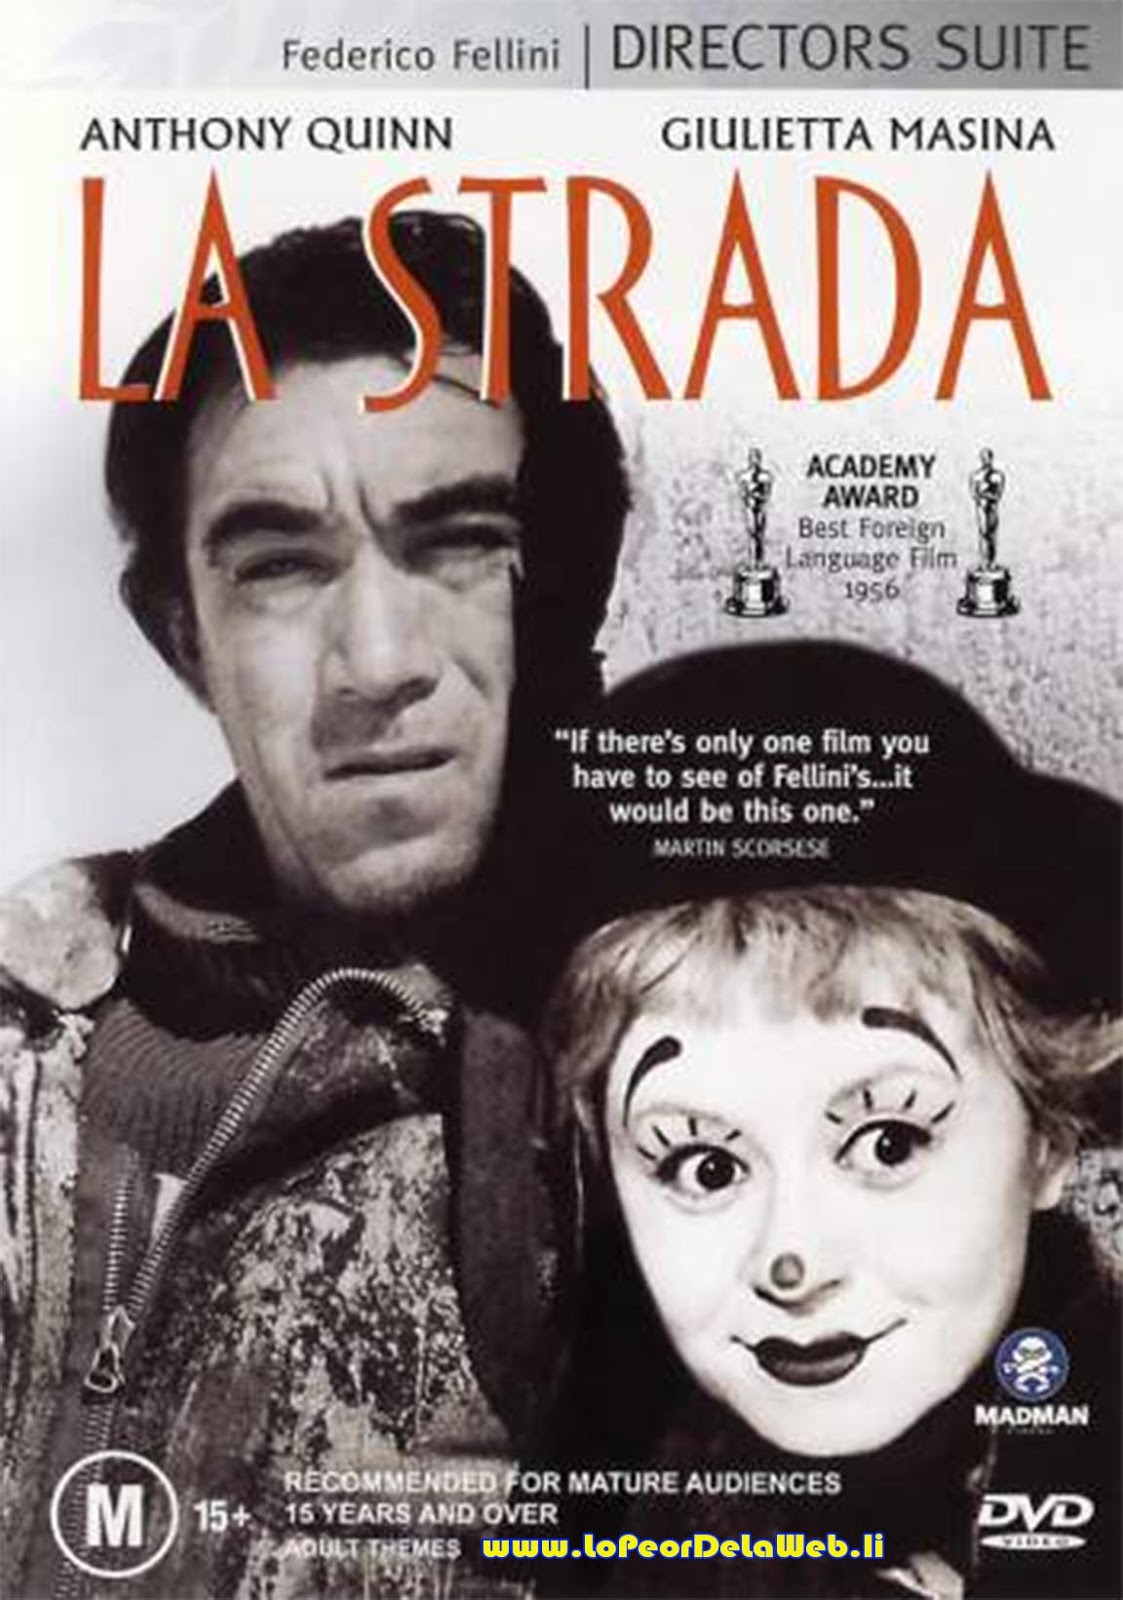 La Strada (1954 - Federico Fellini - Anthony Quinn)